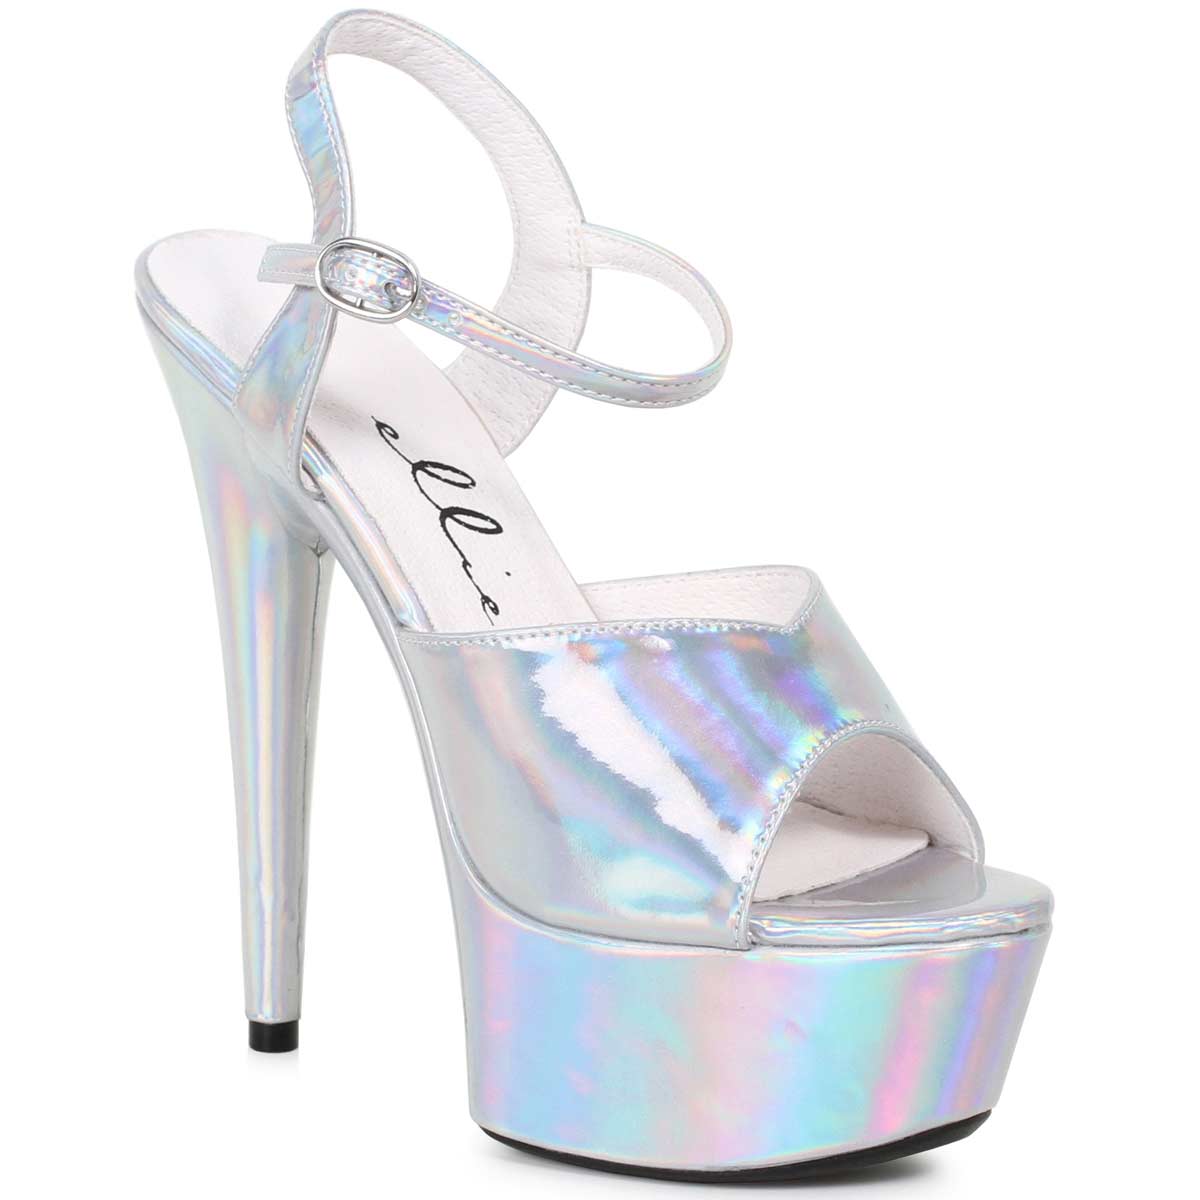 Ellie Shoes 609-LOLA Silver in Sexy Heels & Platforms - $80.95